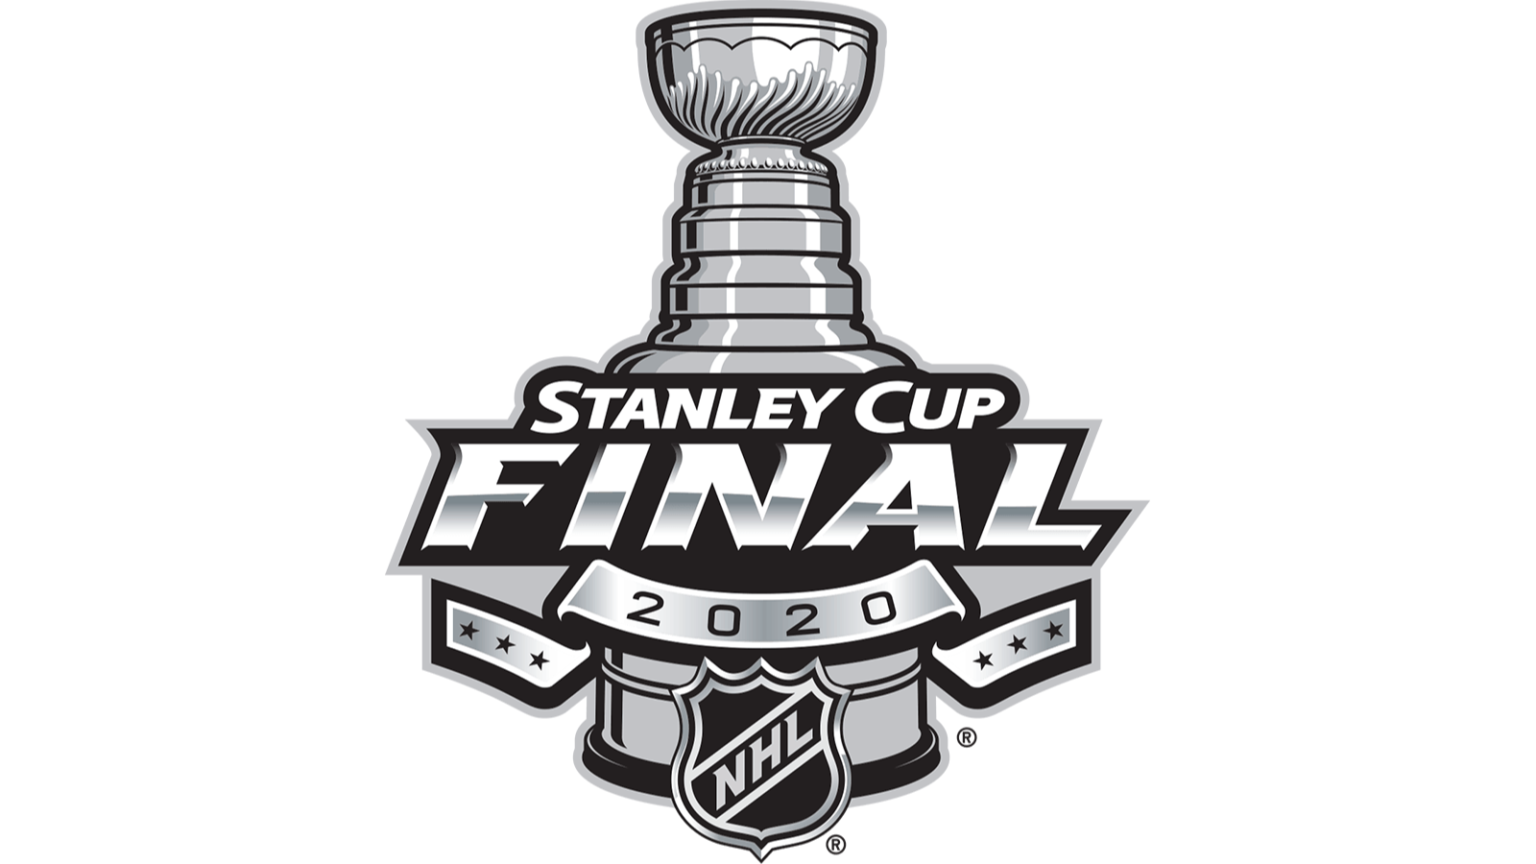 Stanley Cup Finals 2020 Lightning vs. Stars Live Stream, Schedule